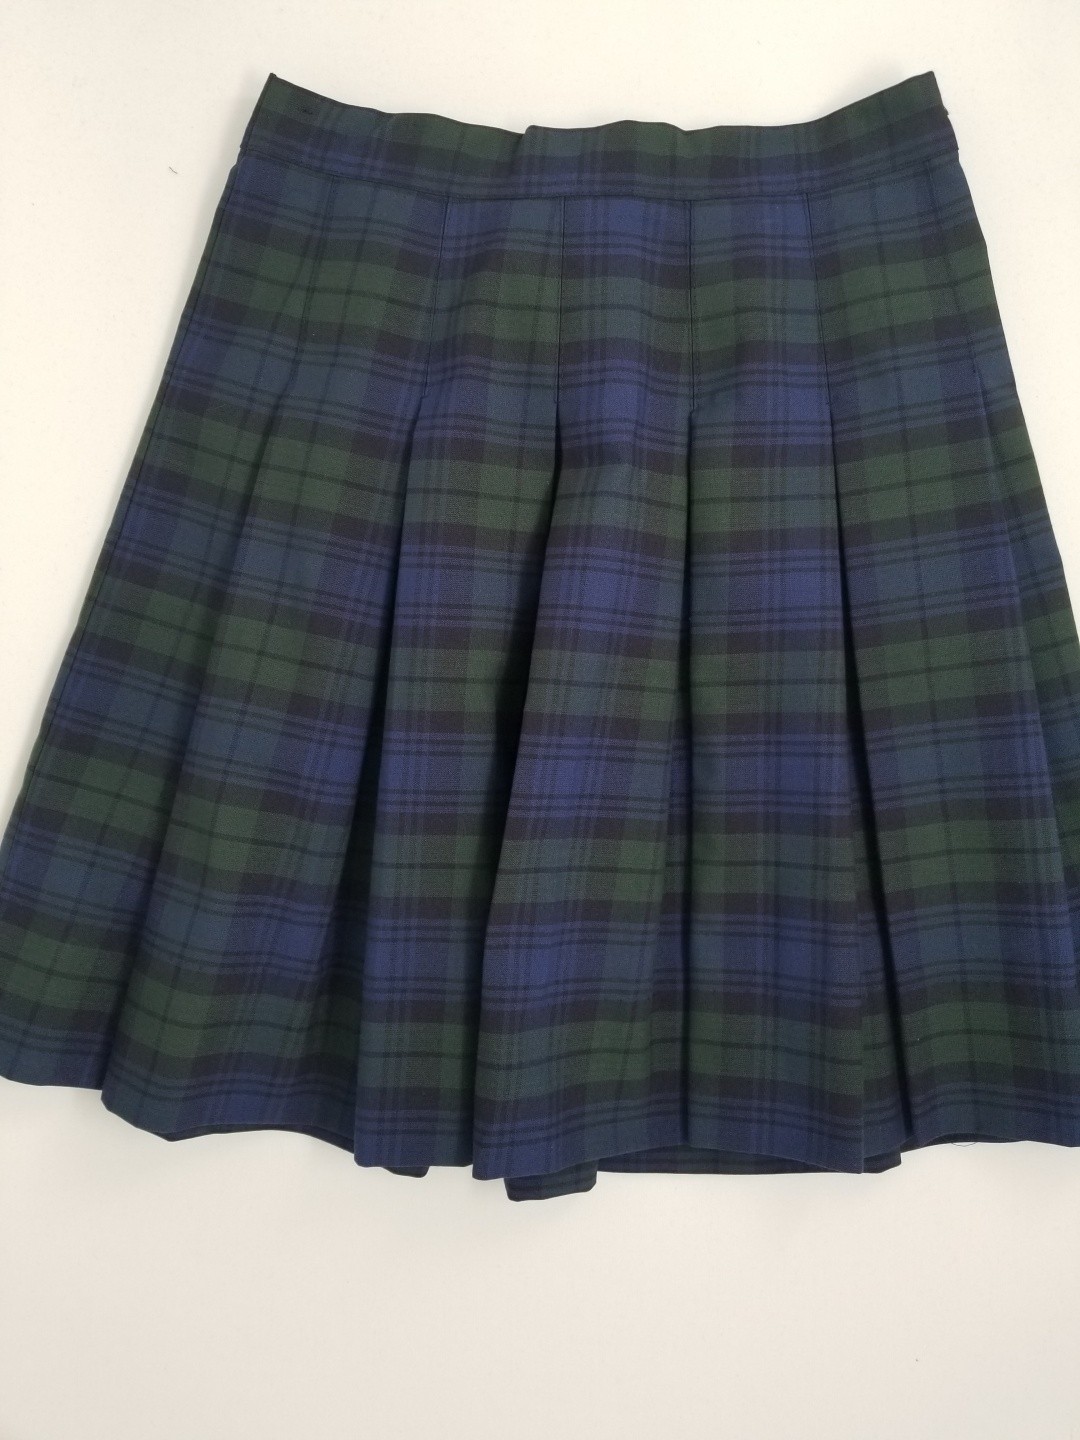 Stitch Down Pleat Skirt- Style 11-Plaid 14